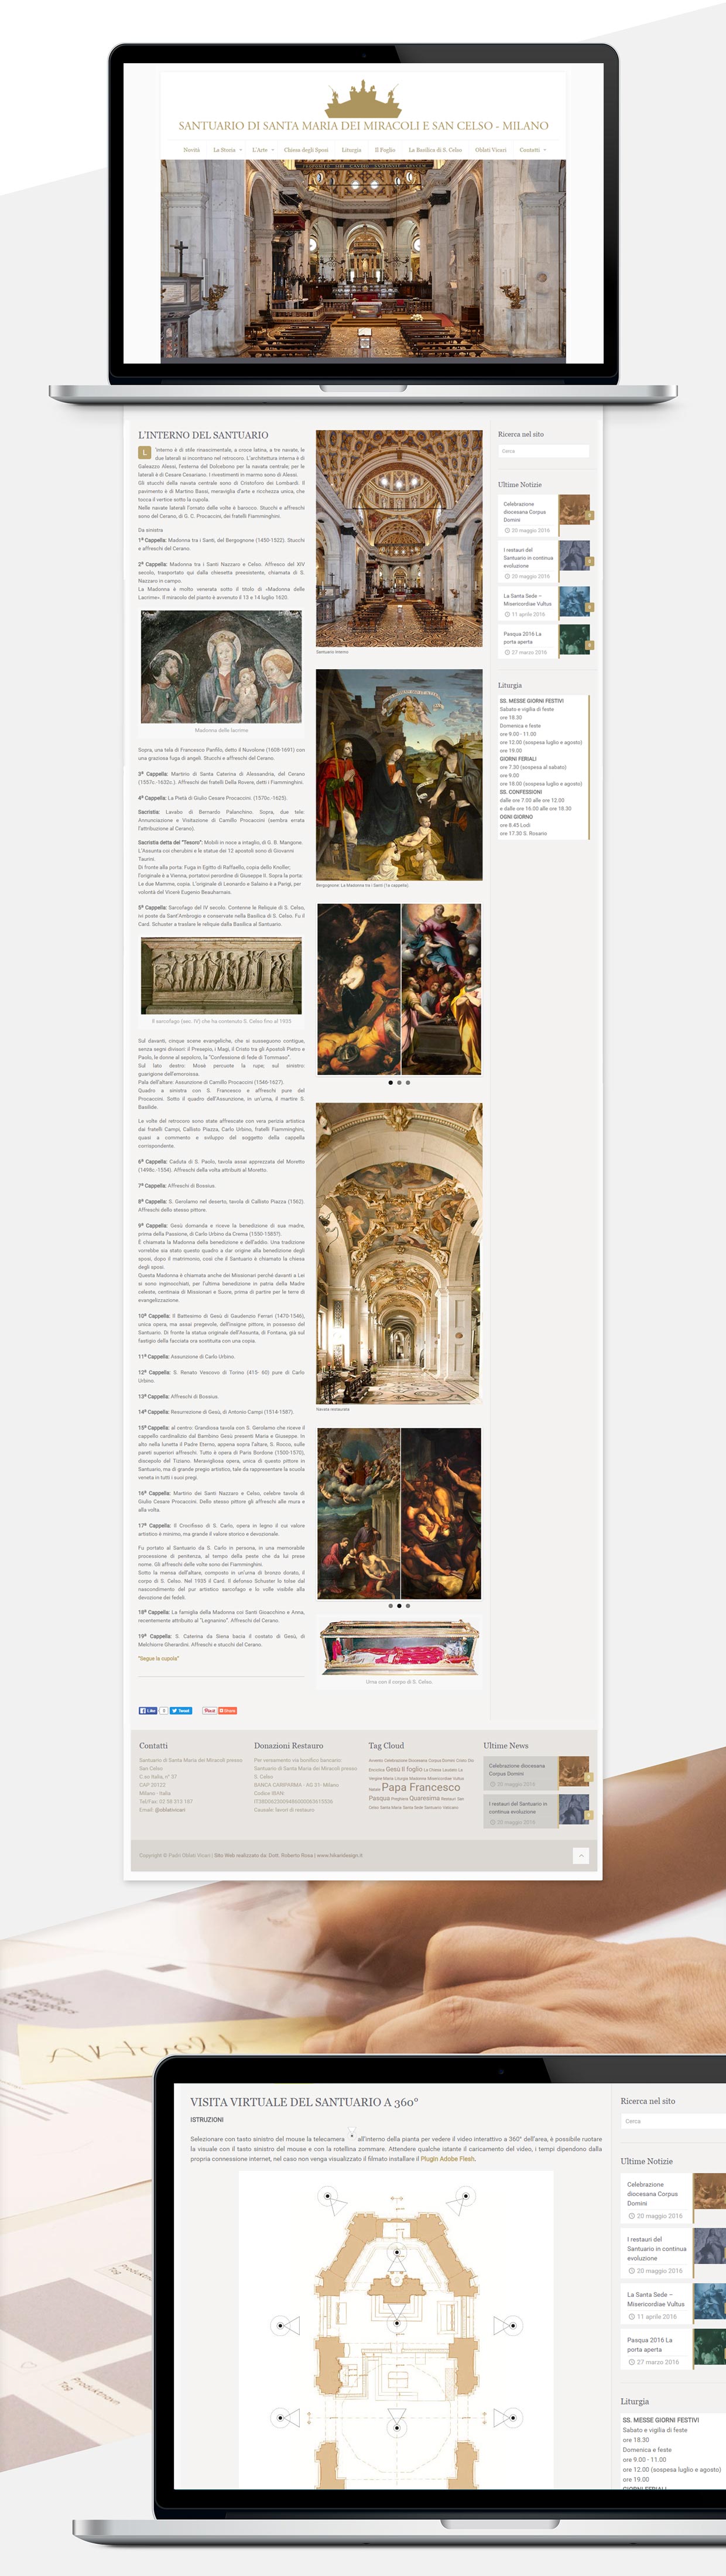 Santa Maria Web Site